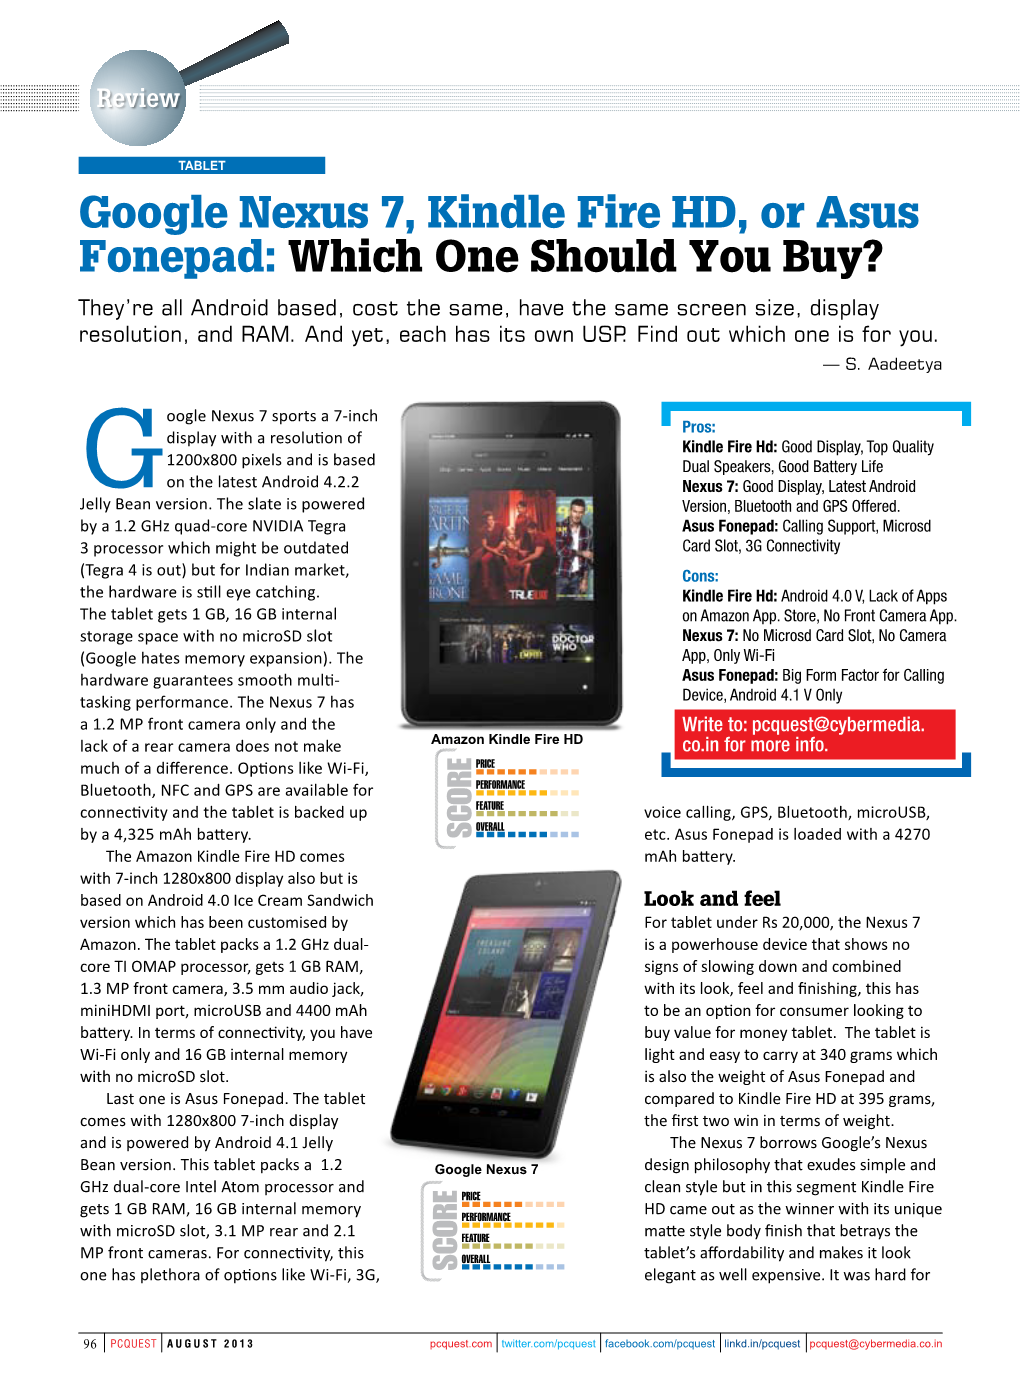 Google Nexus 7, Kindle Fire HD, Or Asus Fonepad